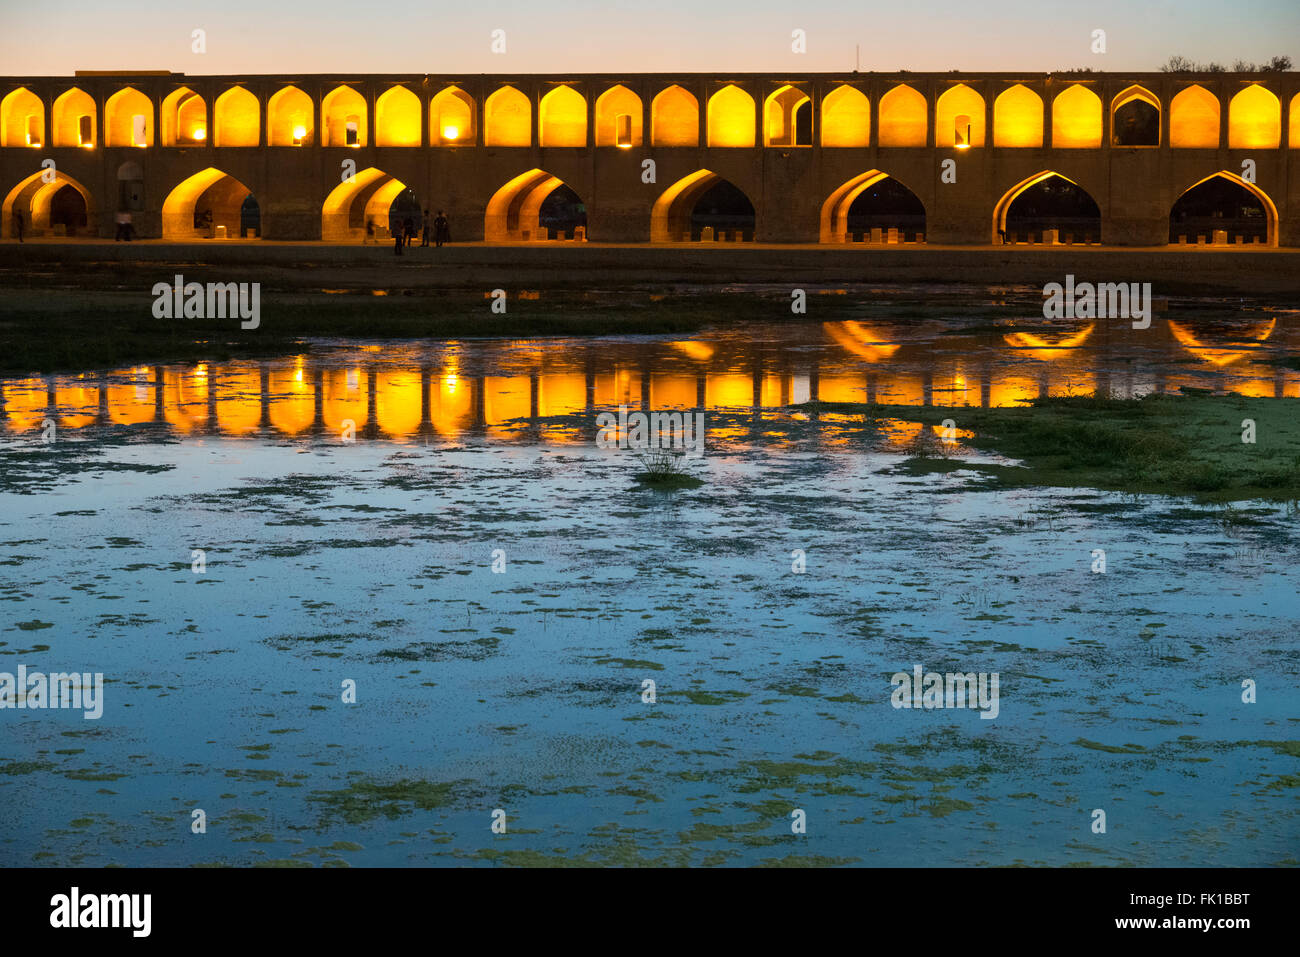 Si o Seh bridge, ESfahan. Iran. Stock Photo